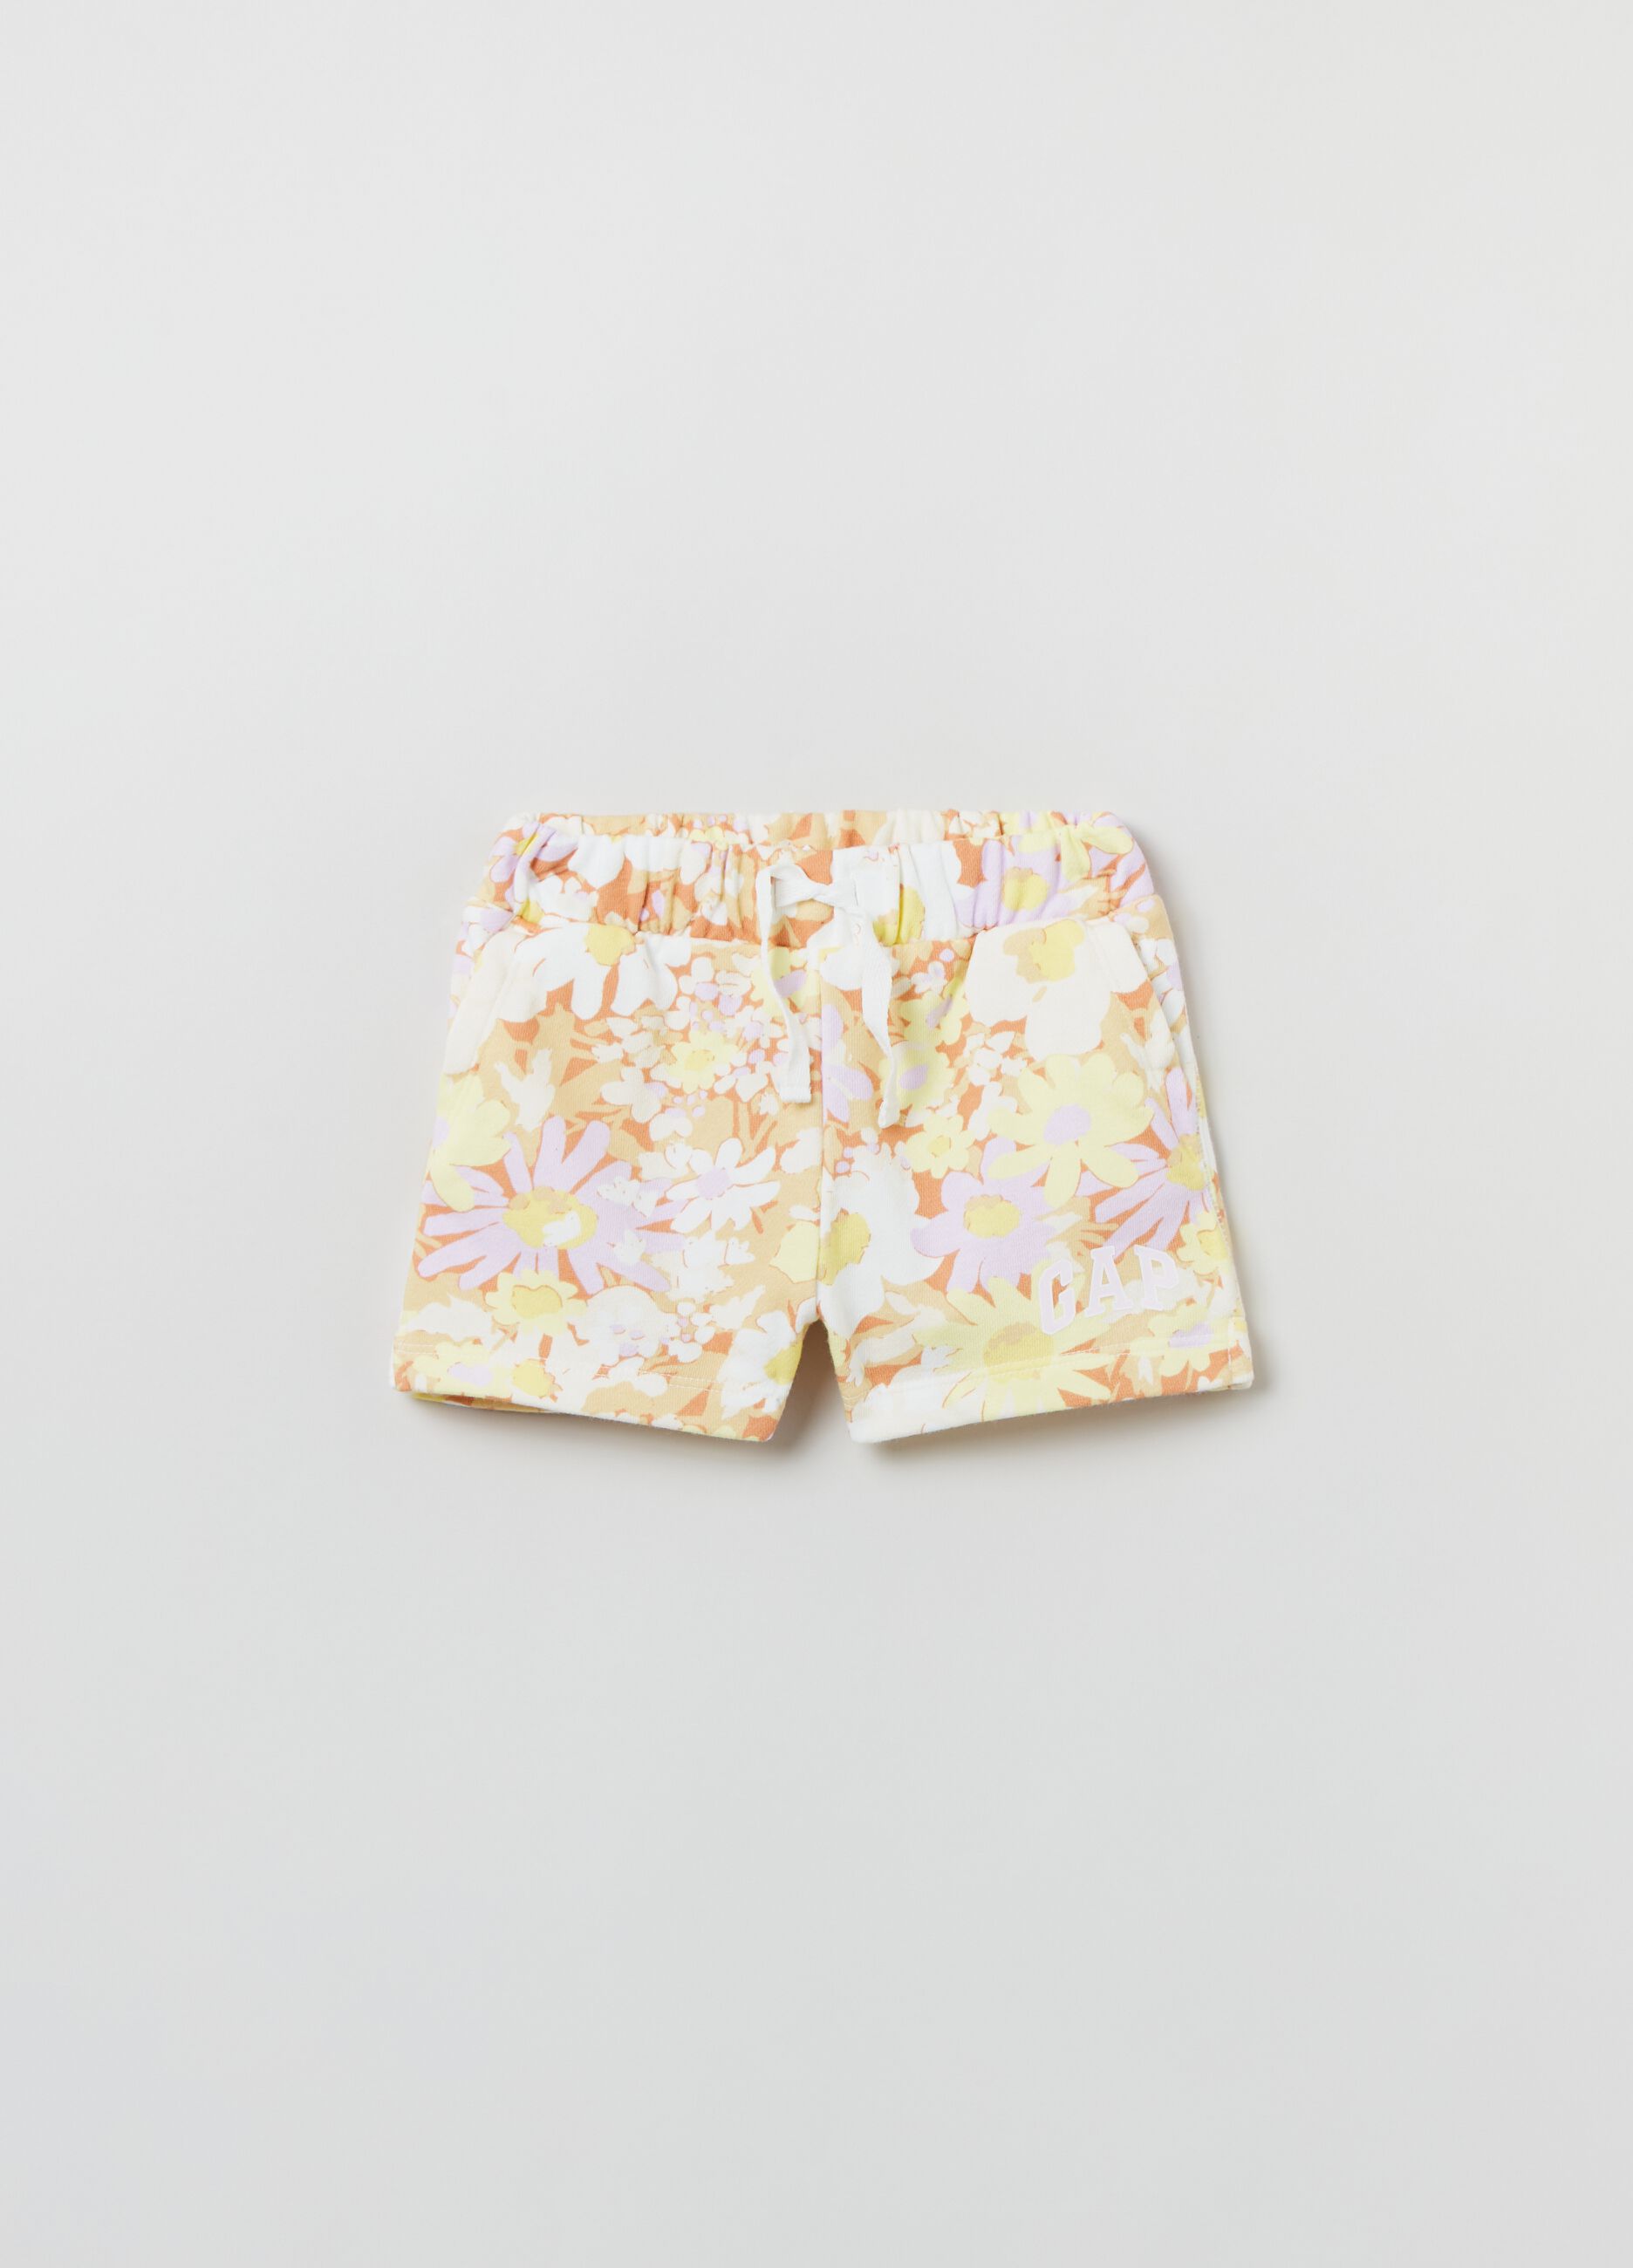 Floral shorts with drawstring